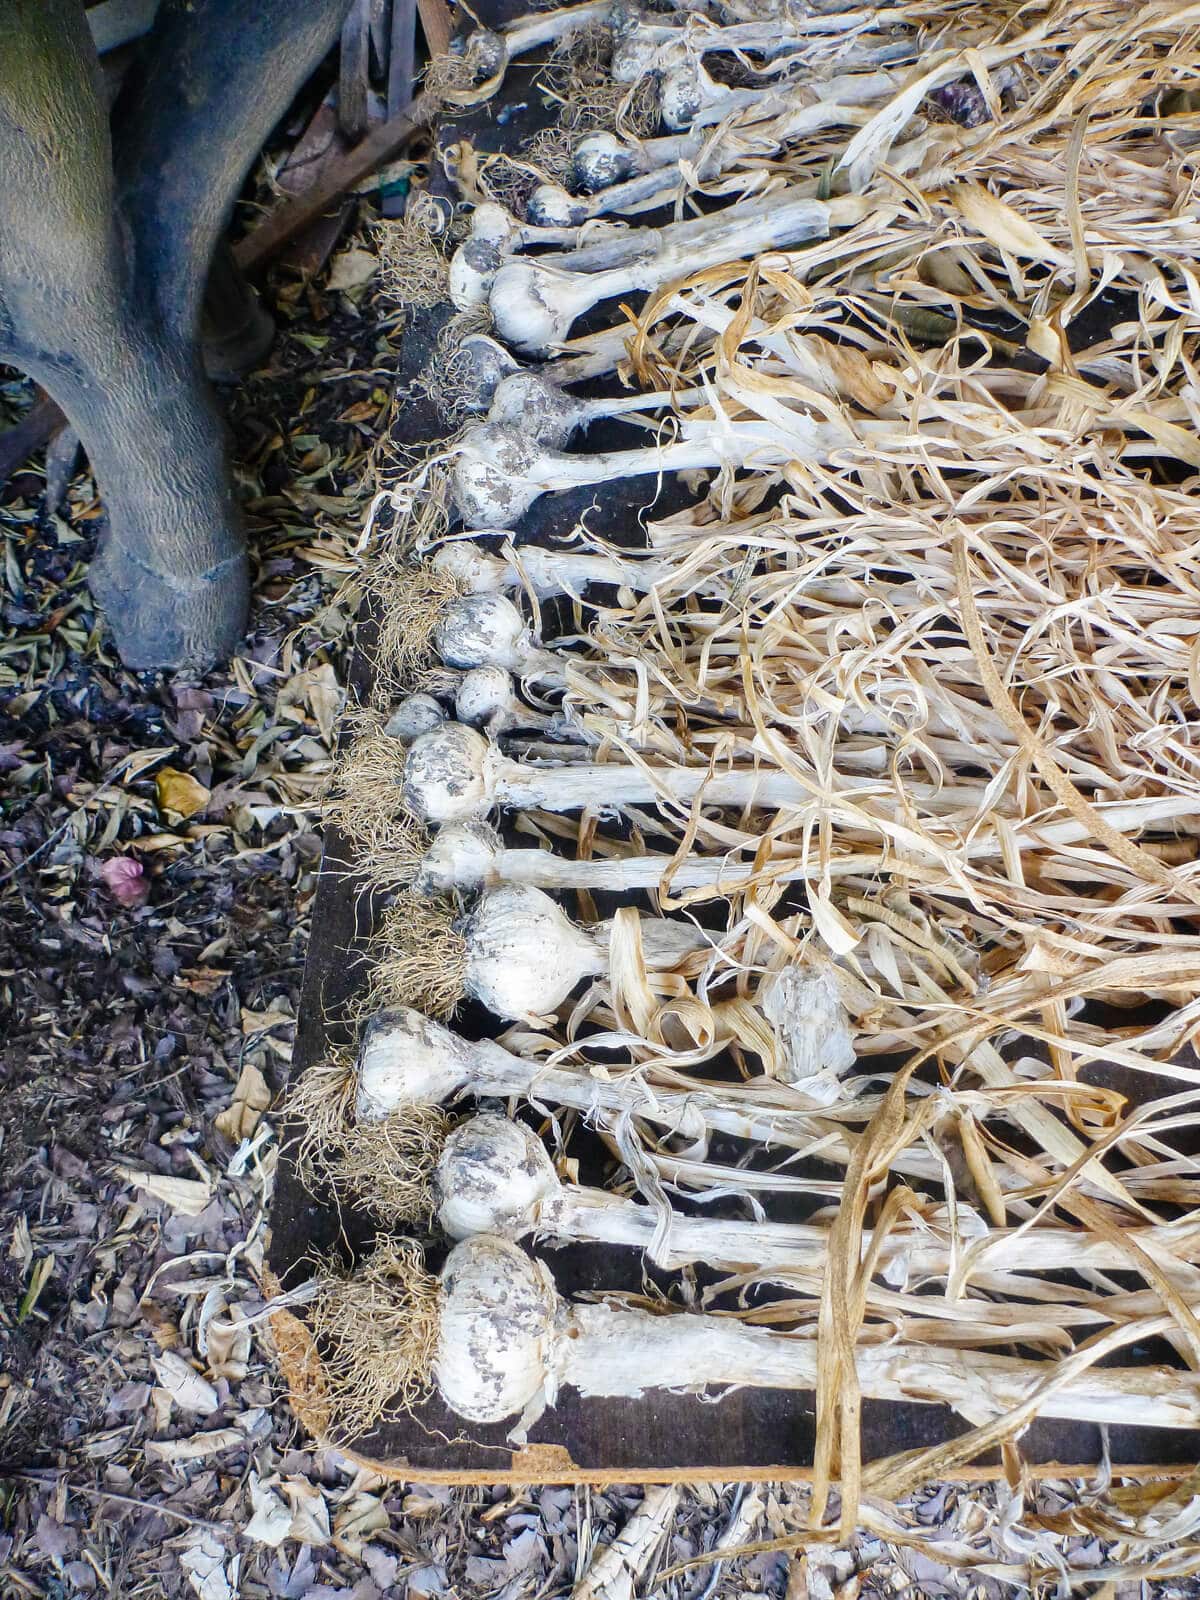 Garlic harvest being cured under a shady tree